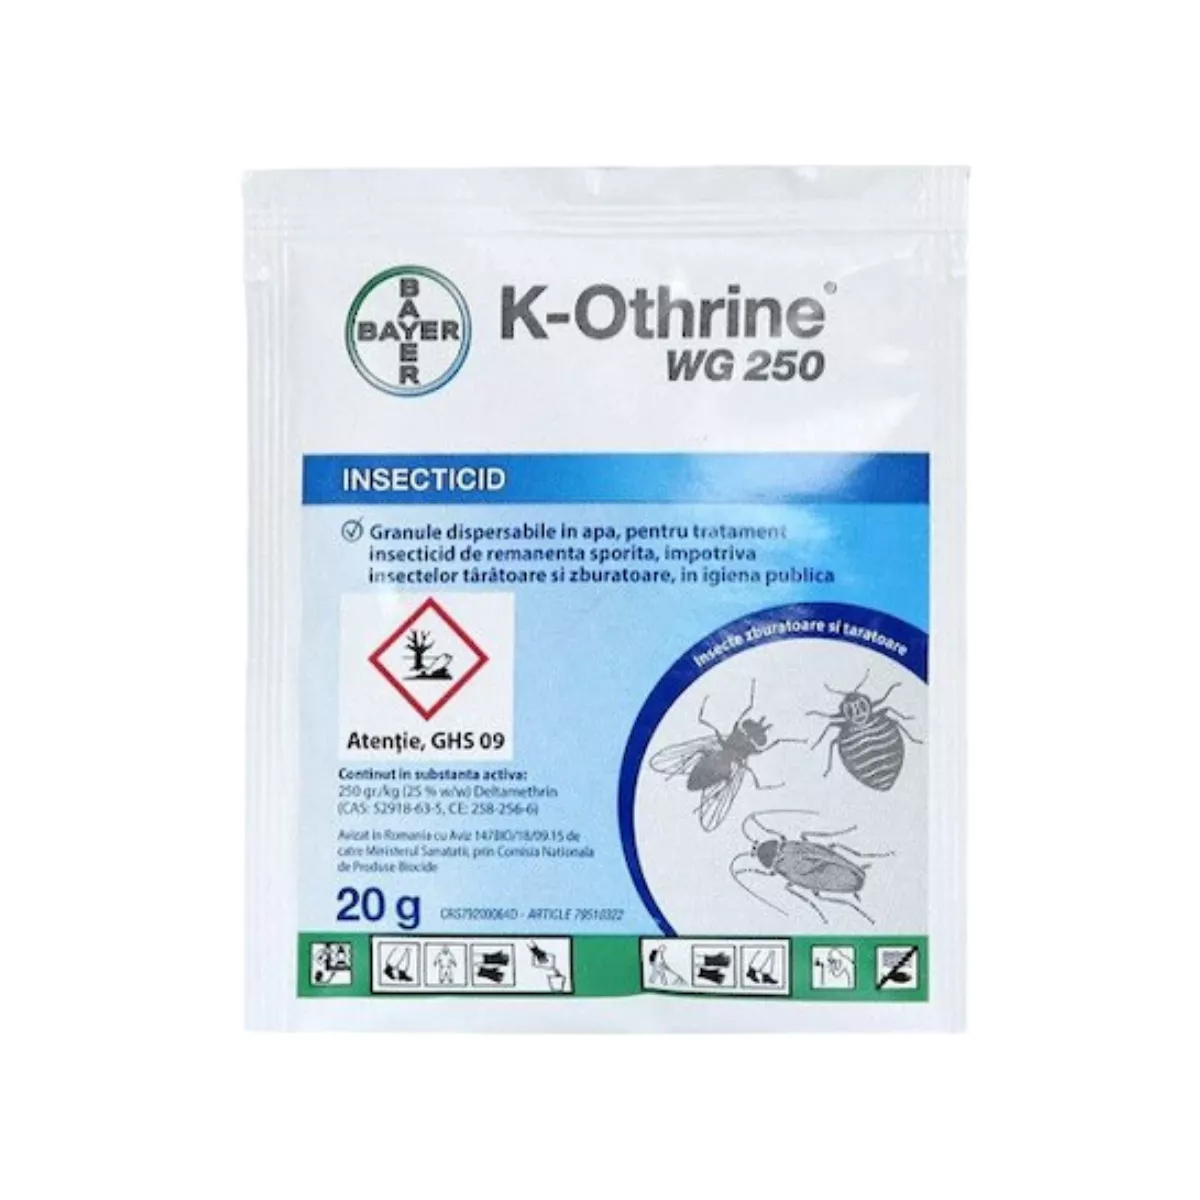 Insecticid K-Othrine 250 WG 20 Grame Bayer 1